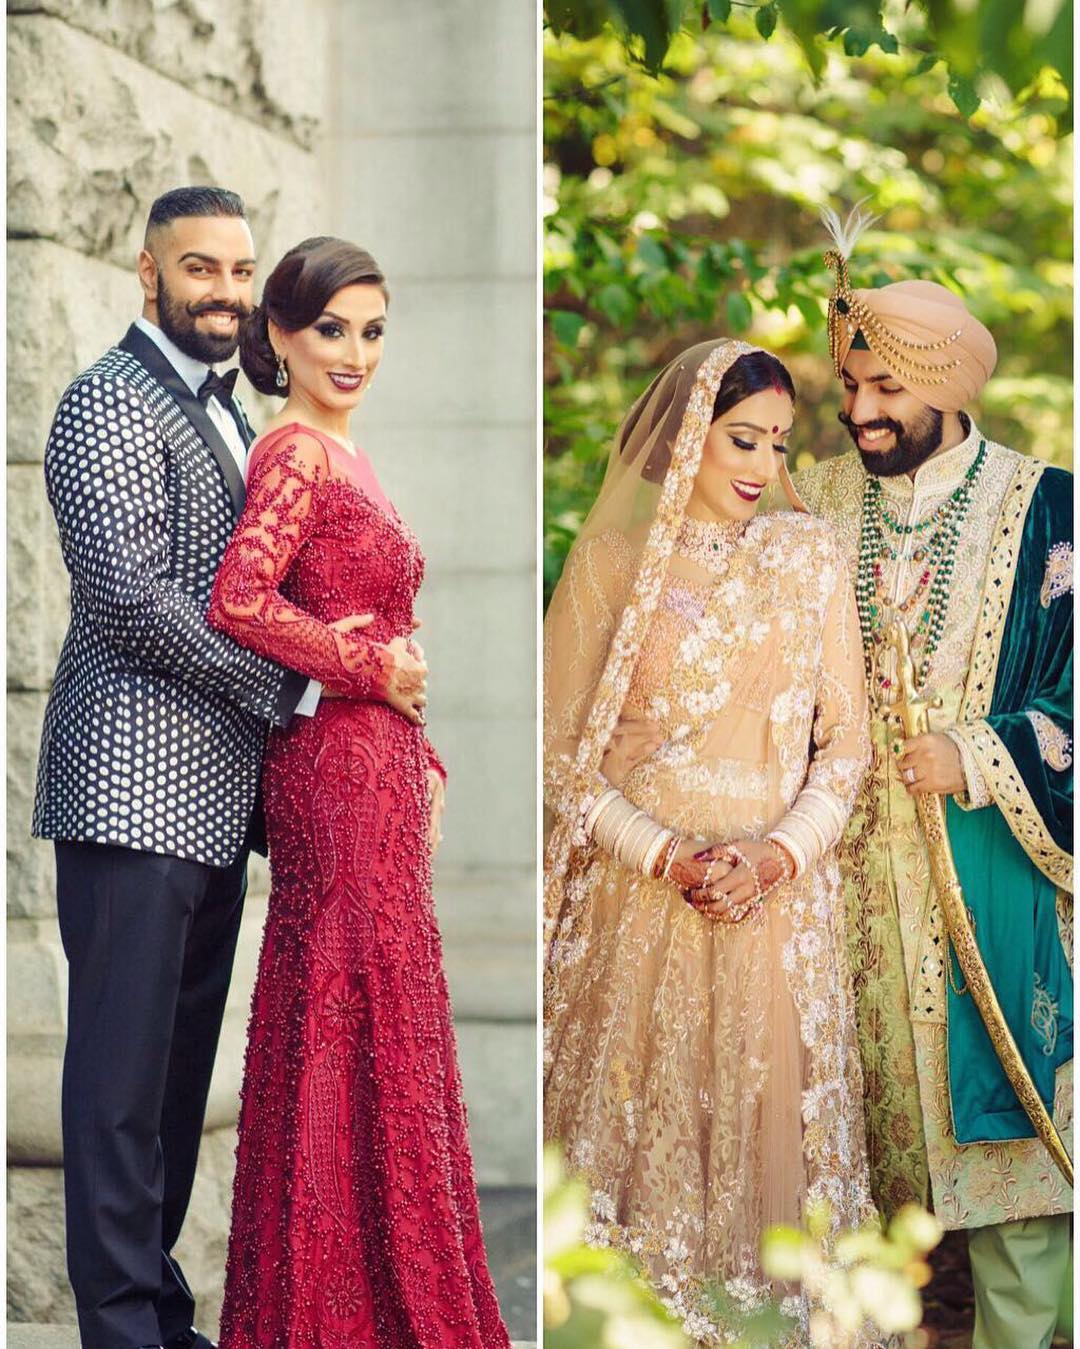 Wallpapers | Images | Picpile: Punjabi Couple wedding ...